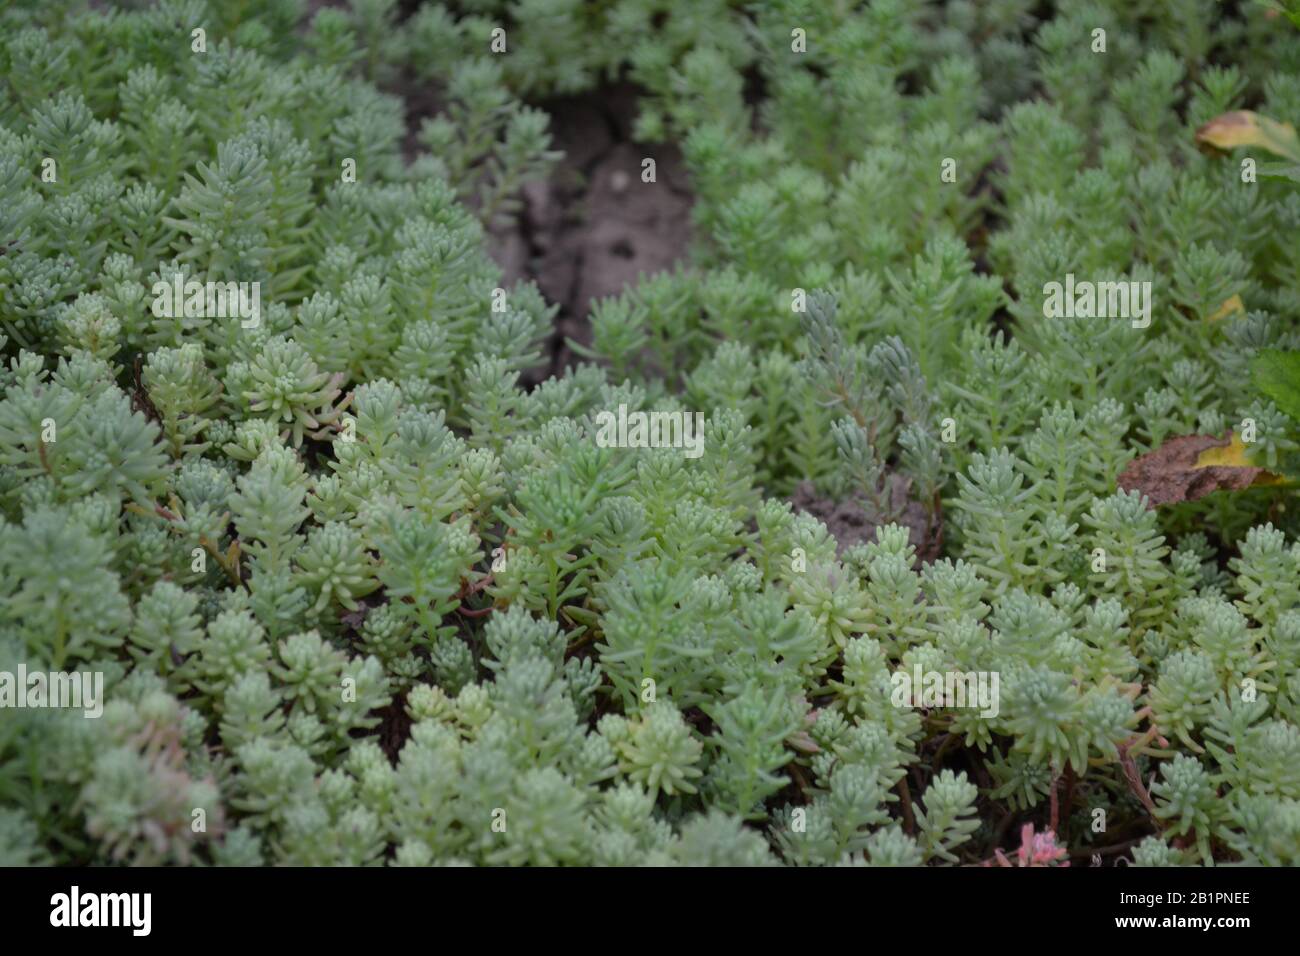 Hare cabbage. Stonecrop.  Sedum. Green moss. Decorative grassy carpet. Green flower bed. Horizontal photo Stock Photo